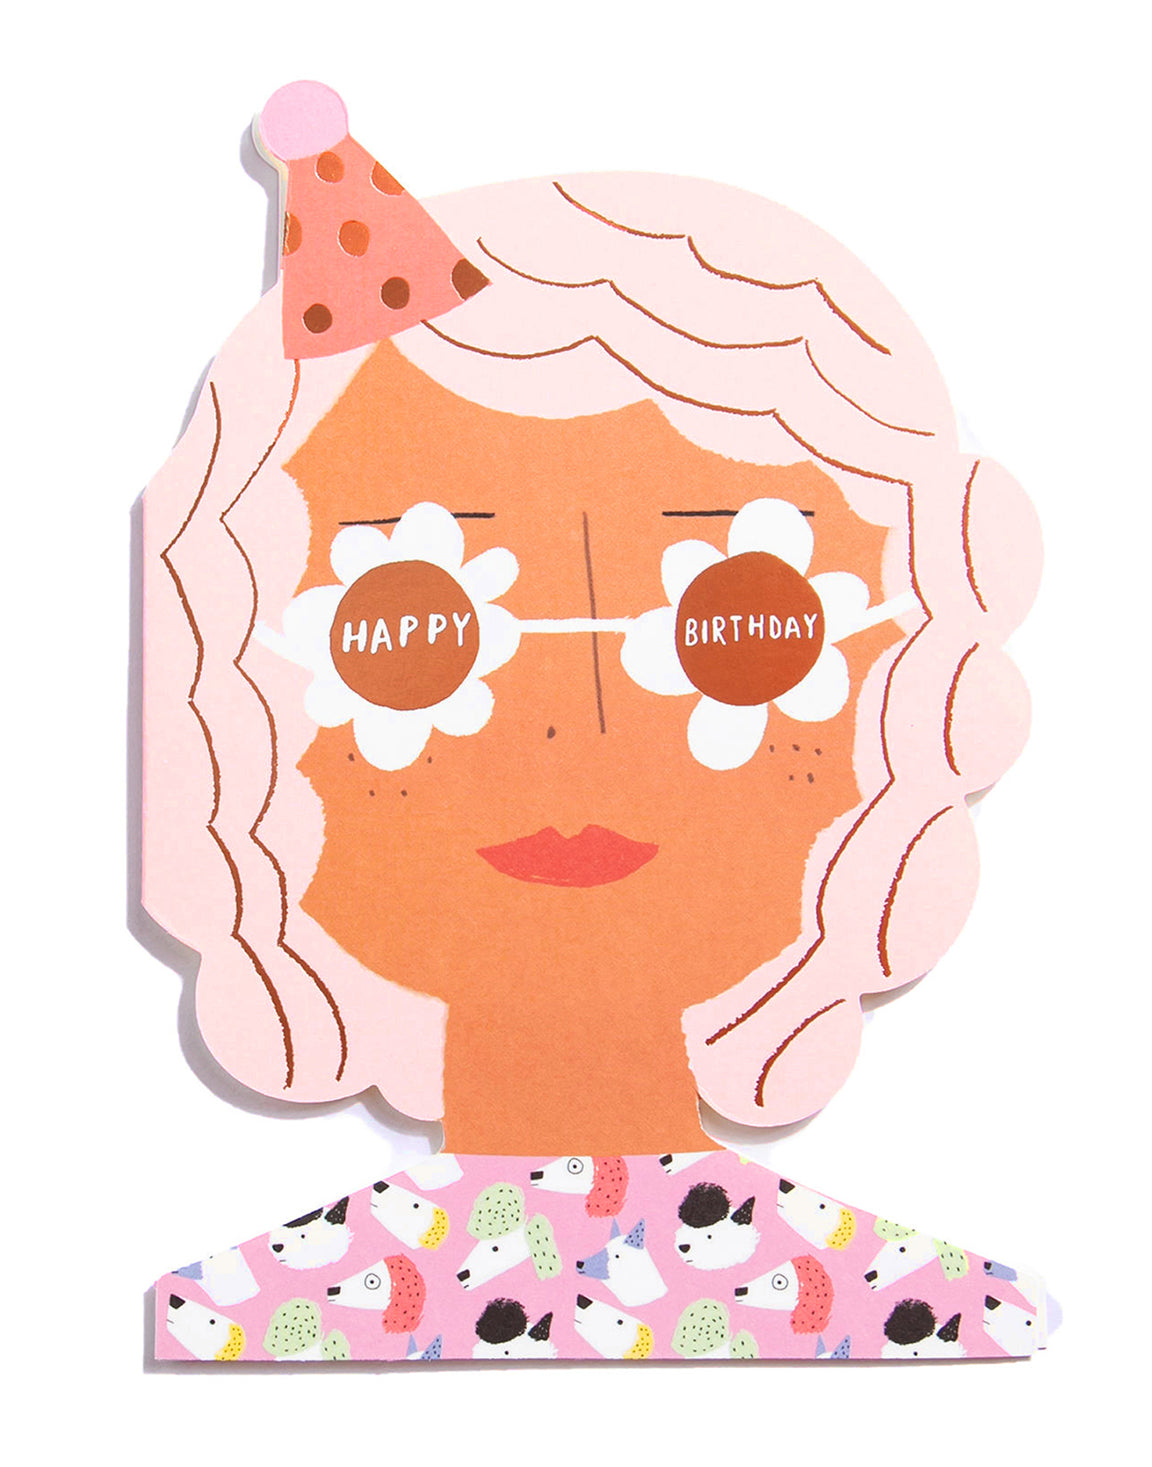 Party Girl Birthday Card